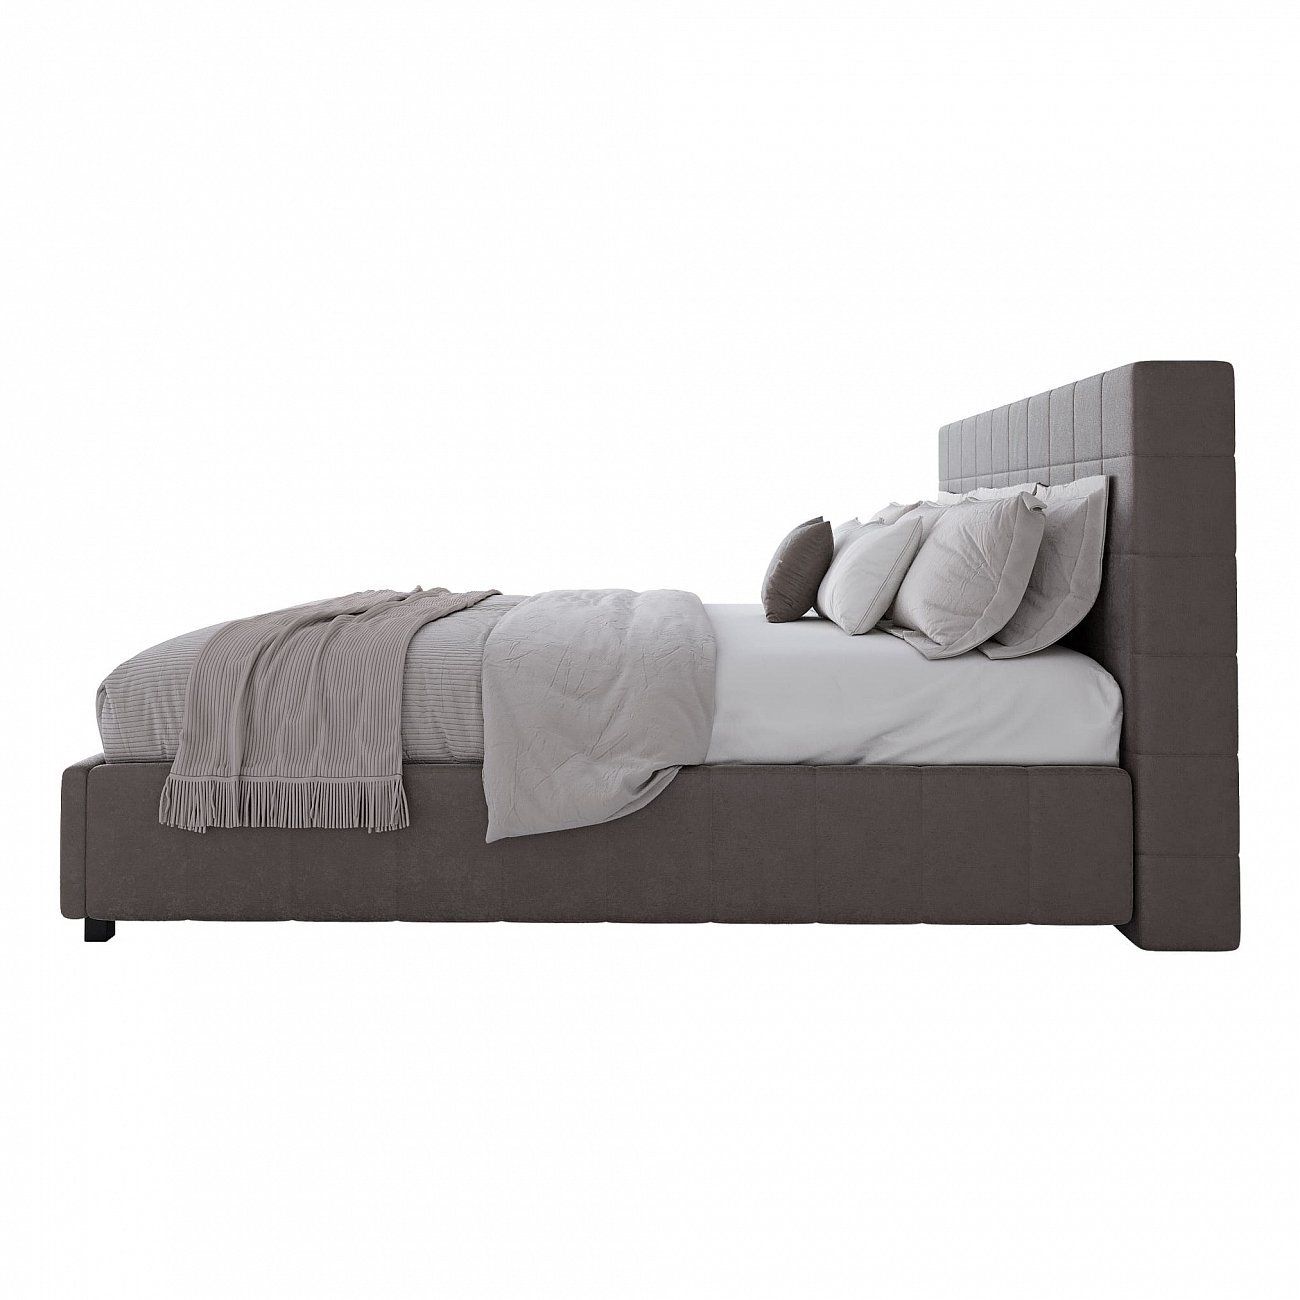 Euro bed 200x200 cm gray-brown Shining Modern